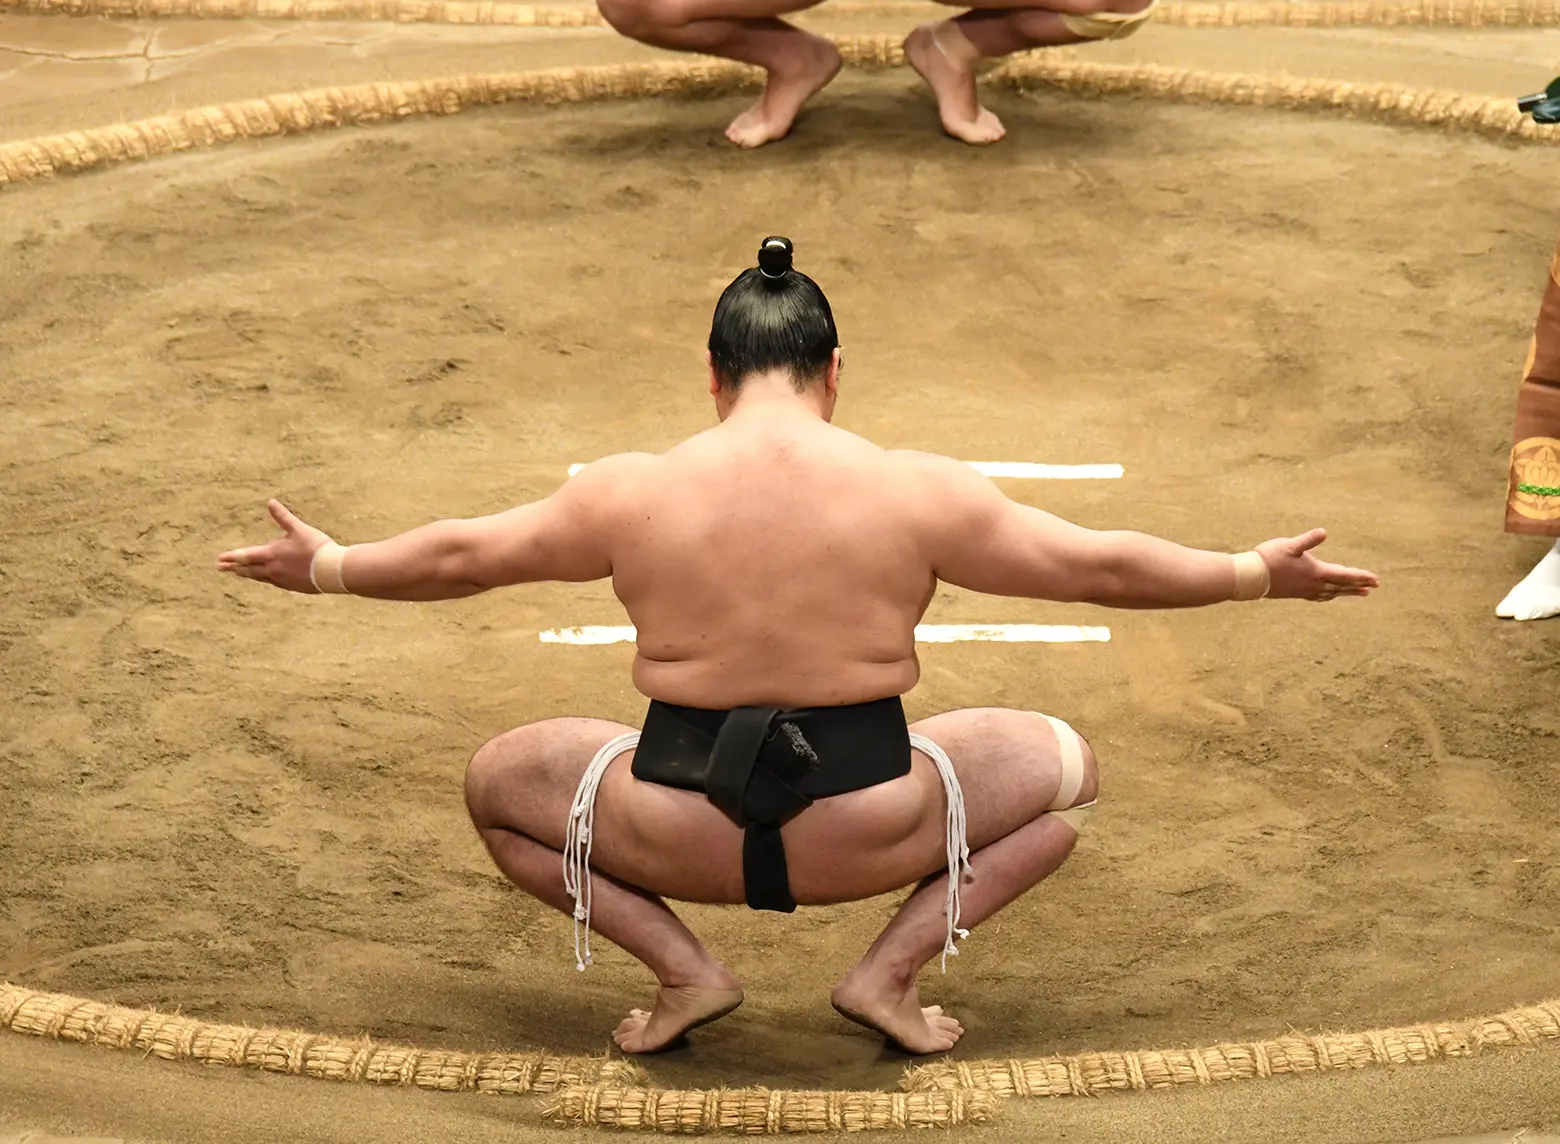 177 Grand Sumo Wrestler / Blender 3D, Sculpting by Medvedev on Dribbble